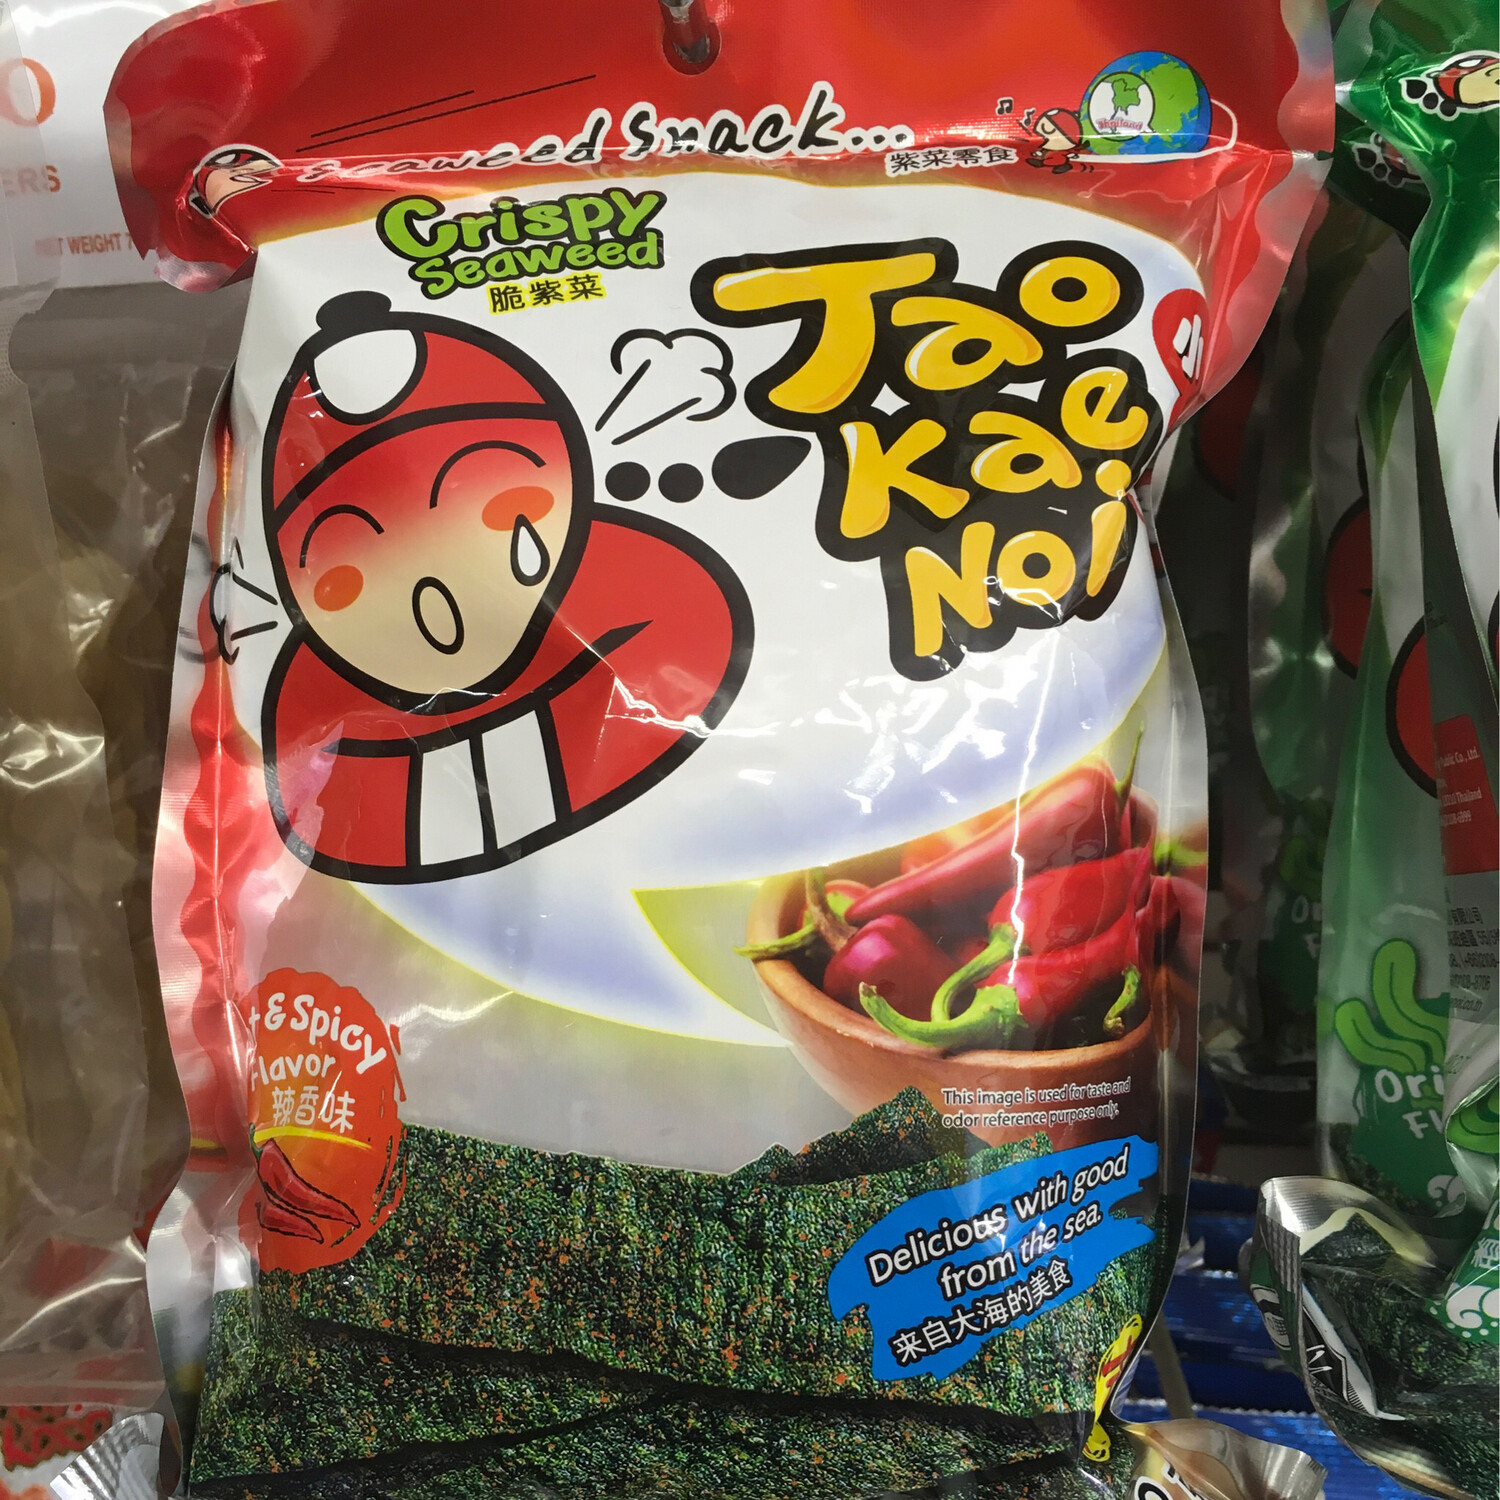 SPICY Tao Kae Noi Crispy Seaweed